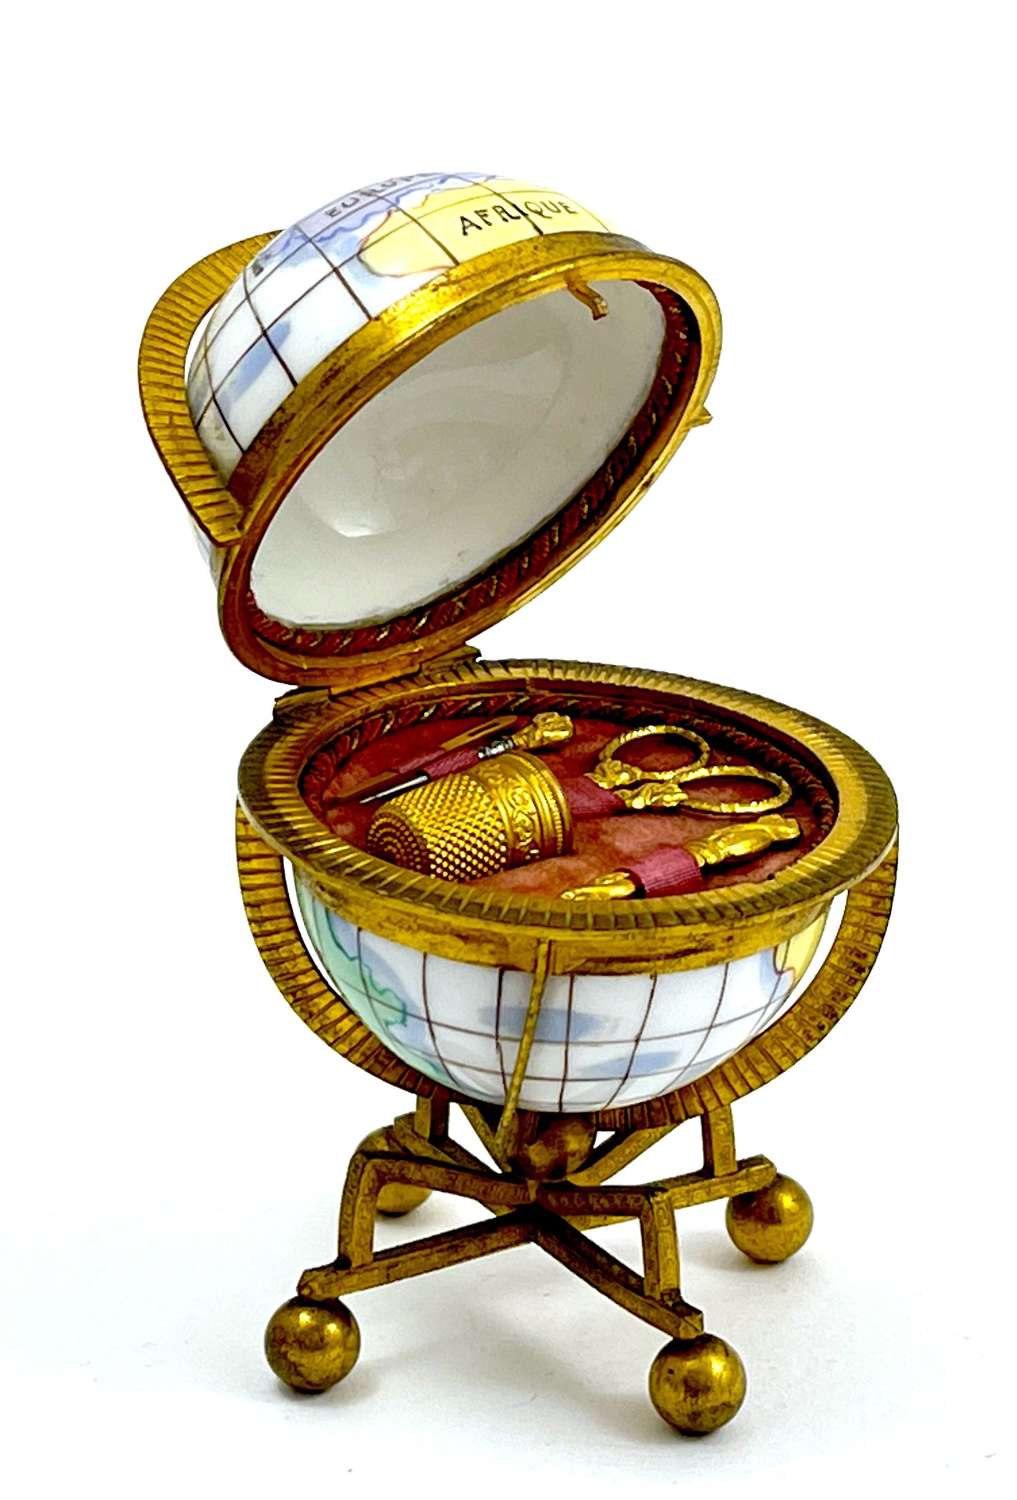 RARE Antqiue Palais Royal French Porcelain Globe Shaped Sewing Set.